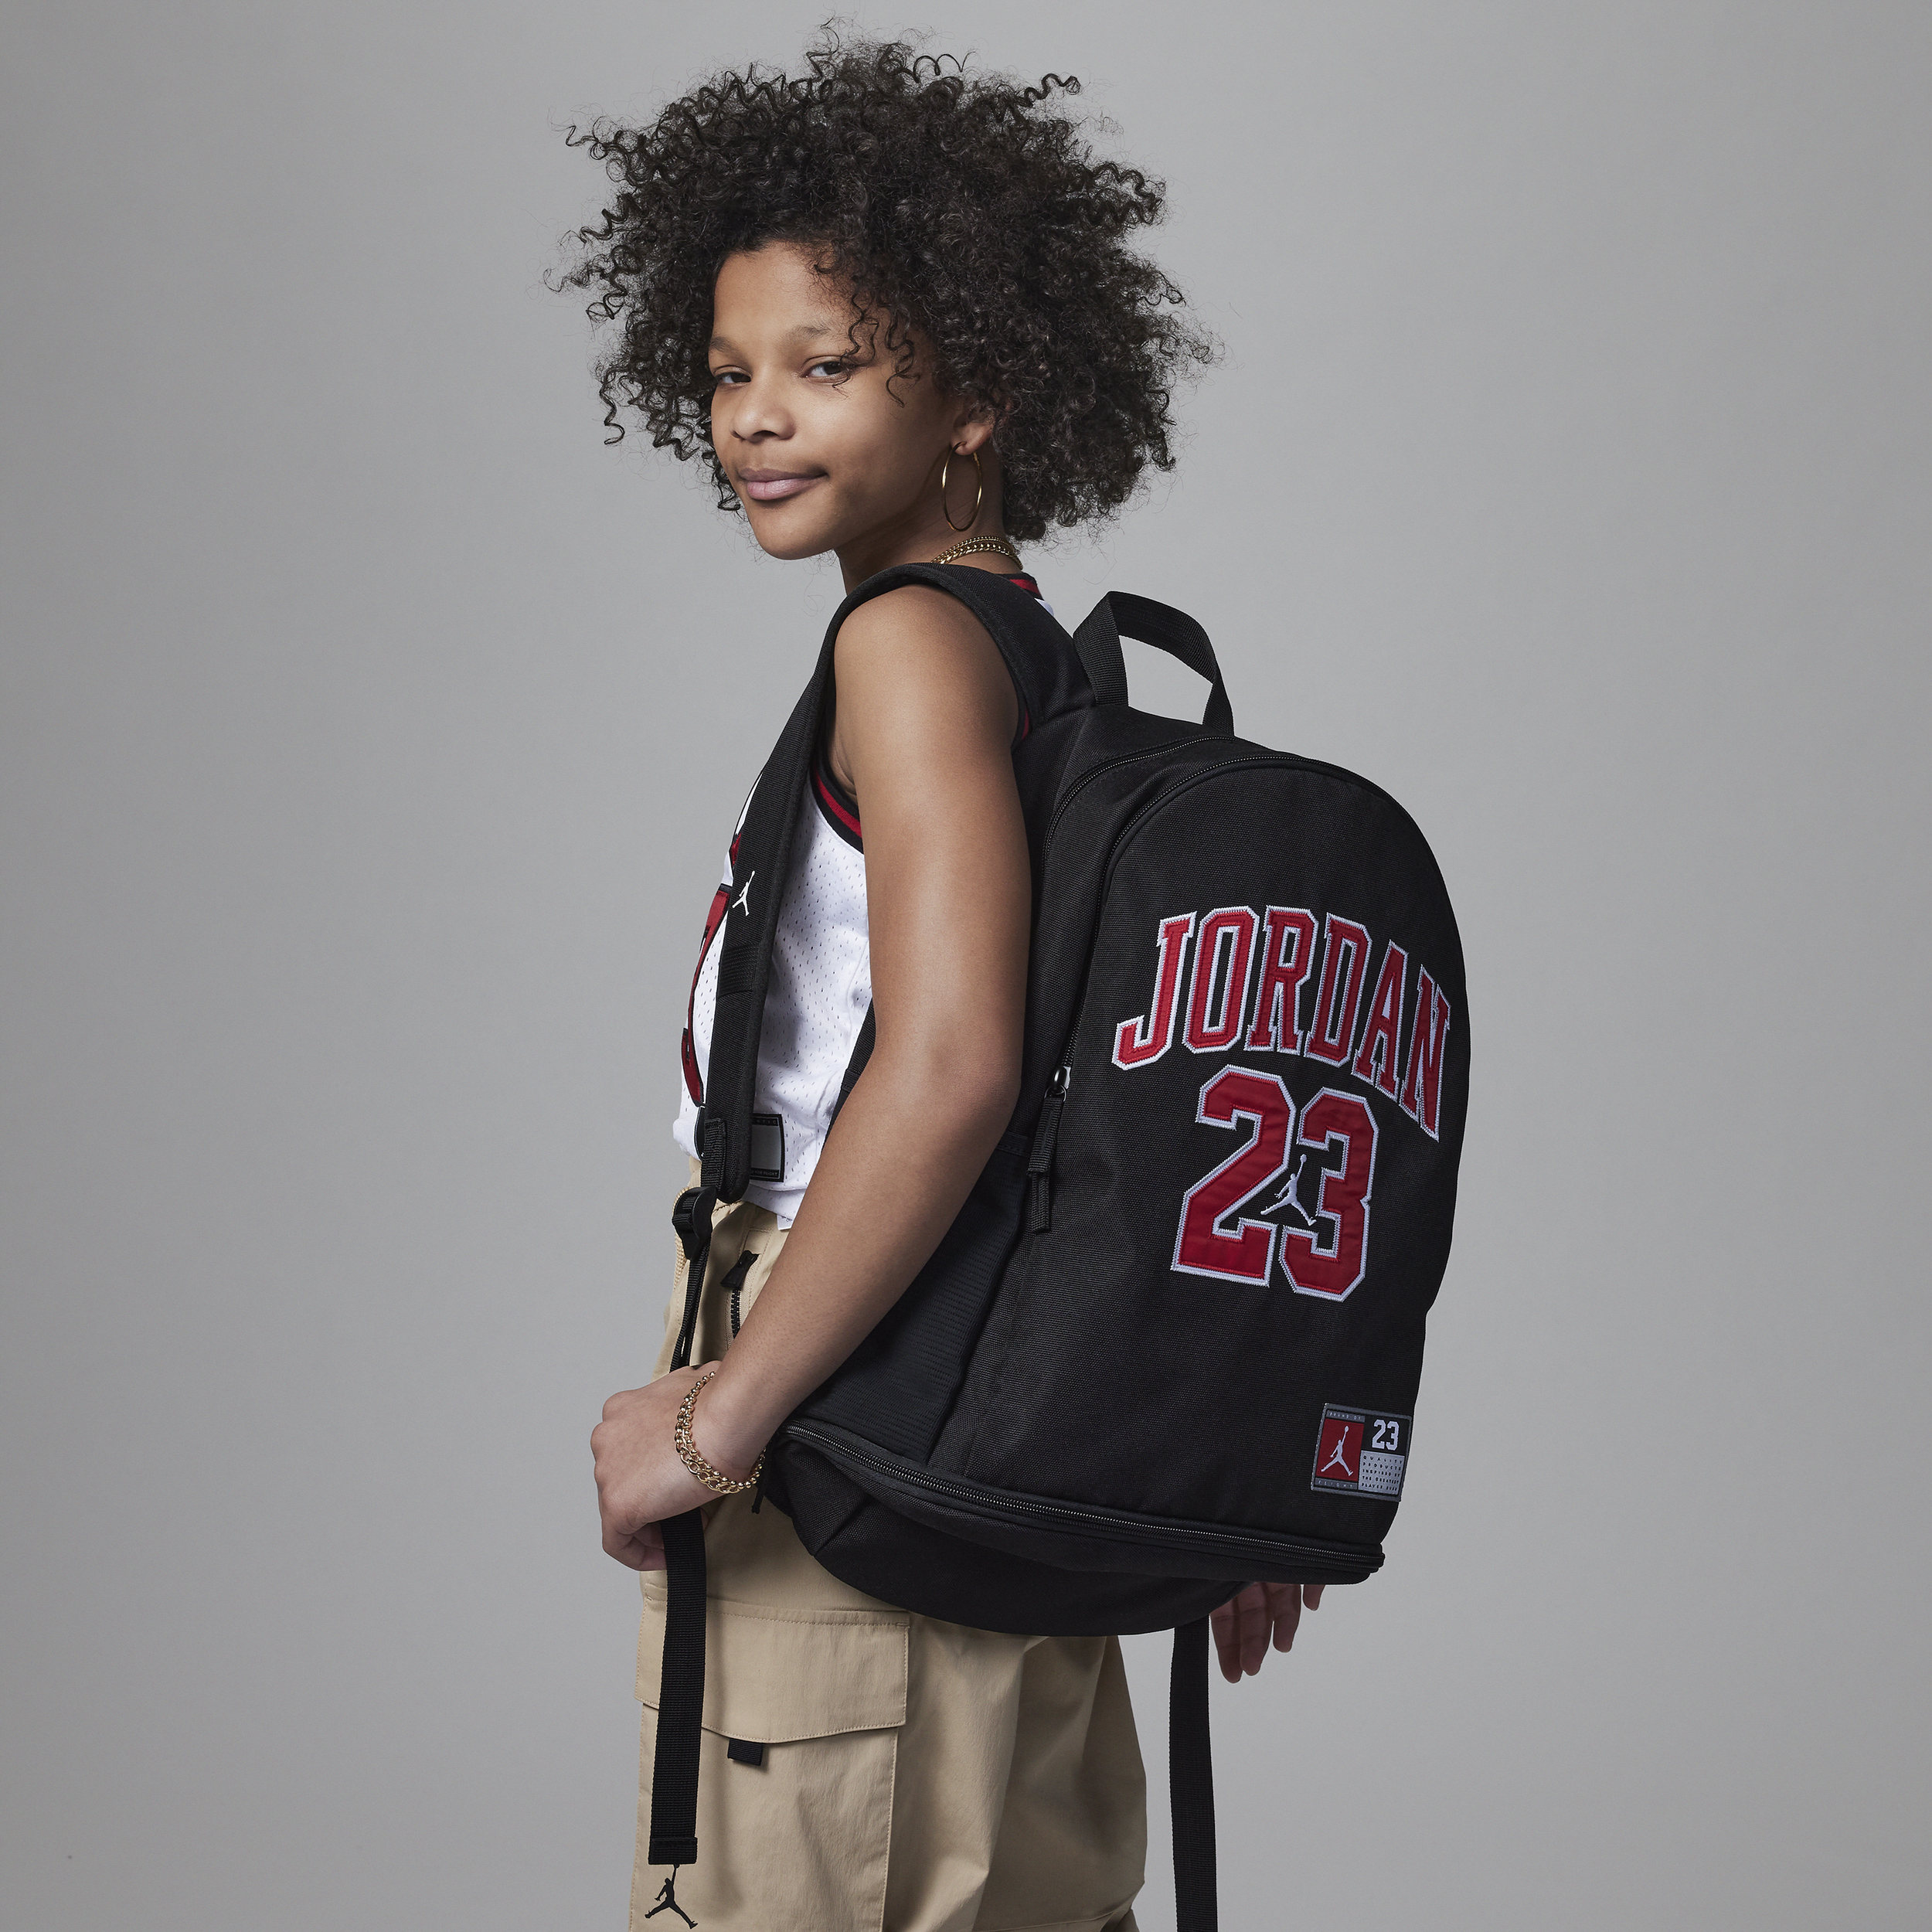 Jordan Jersey Backpack Mochila - Niño/a (27 l) - Negro